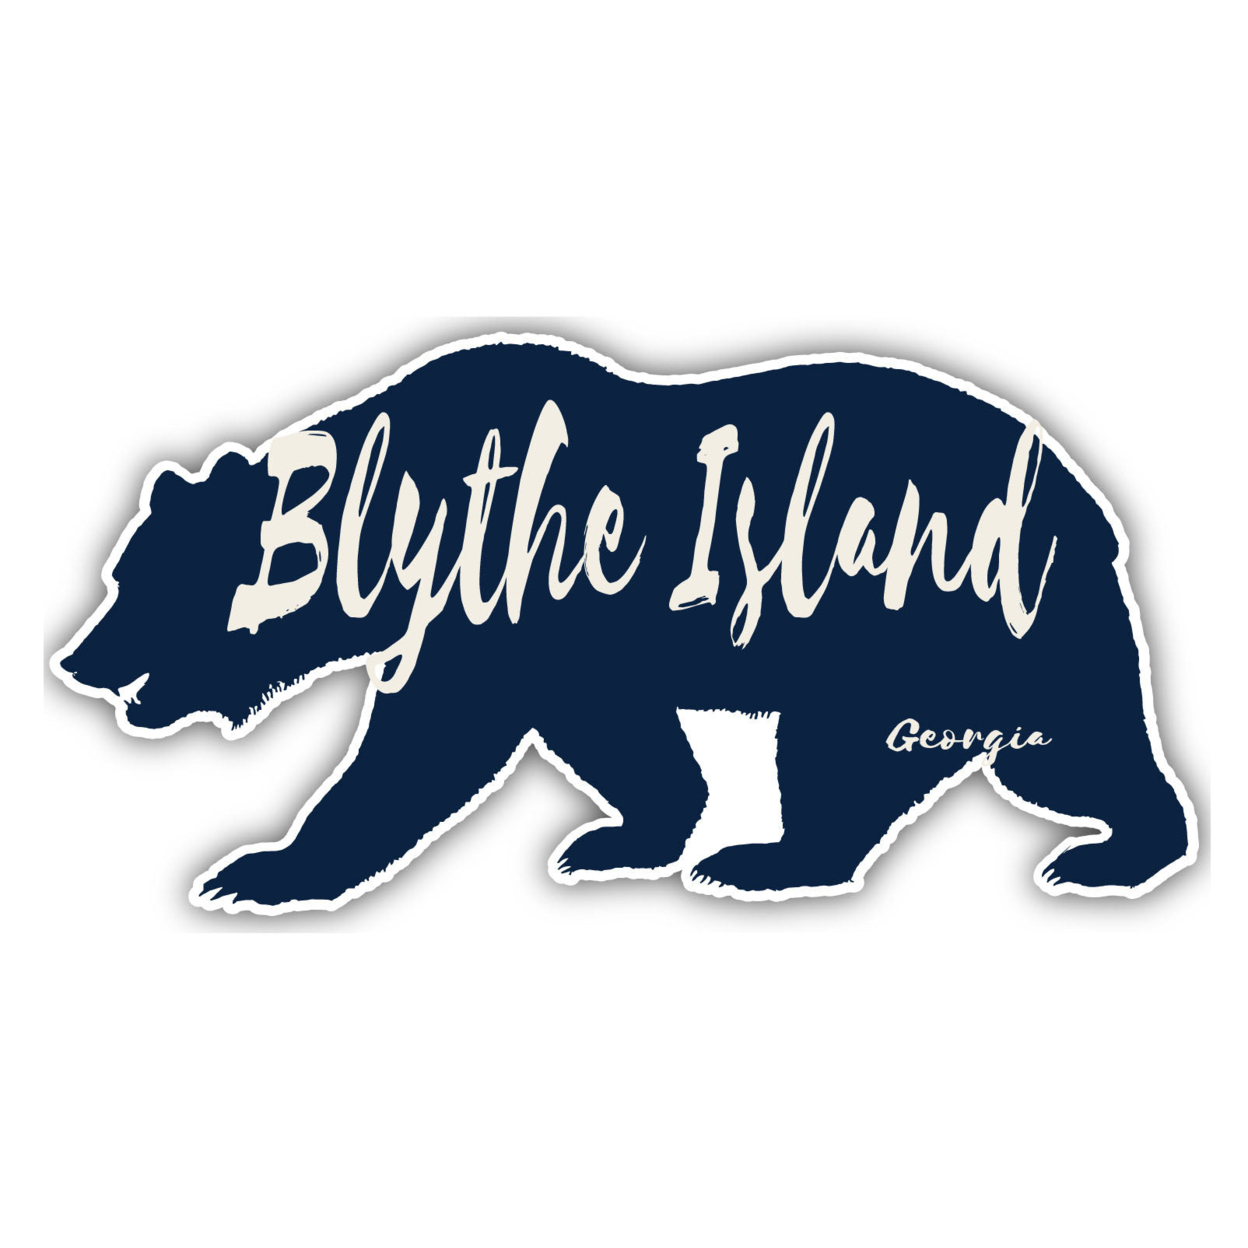 Blythe Island Georgia Souvenir Decorative Stickers (Choose Theme And Size) - 4-Pack, 2-Inch, Bear